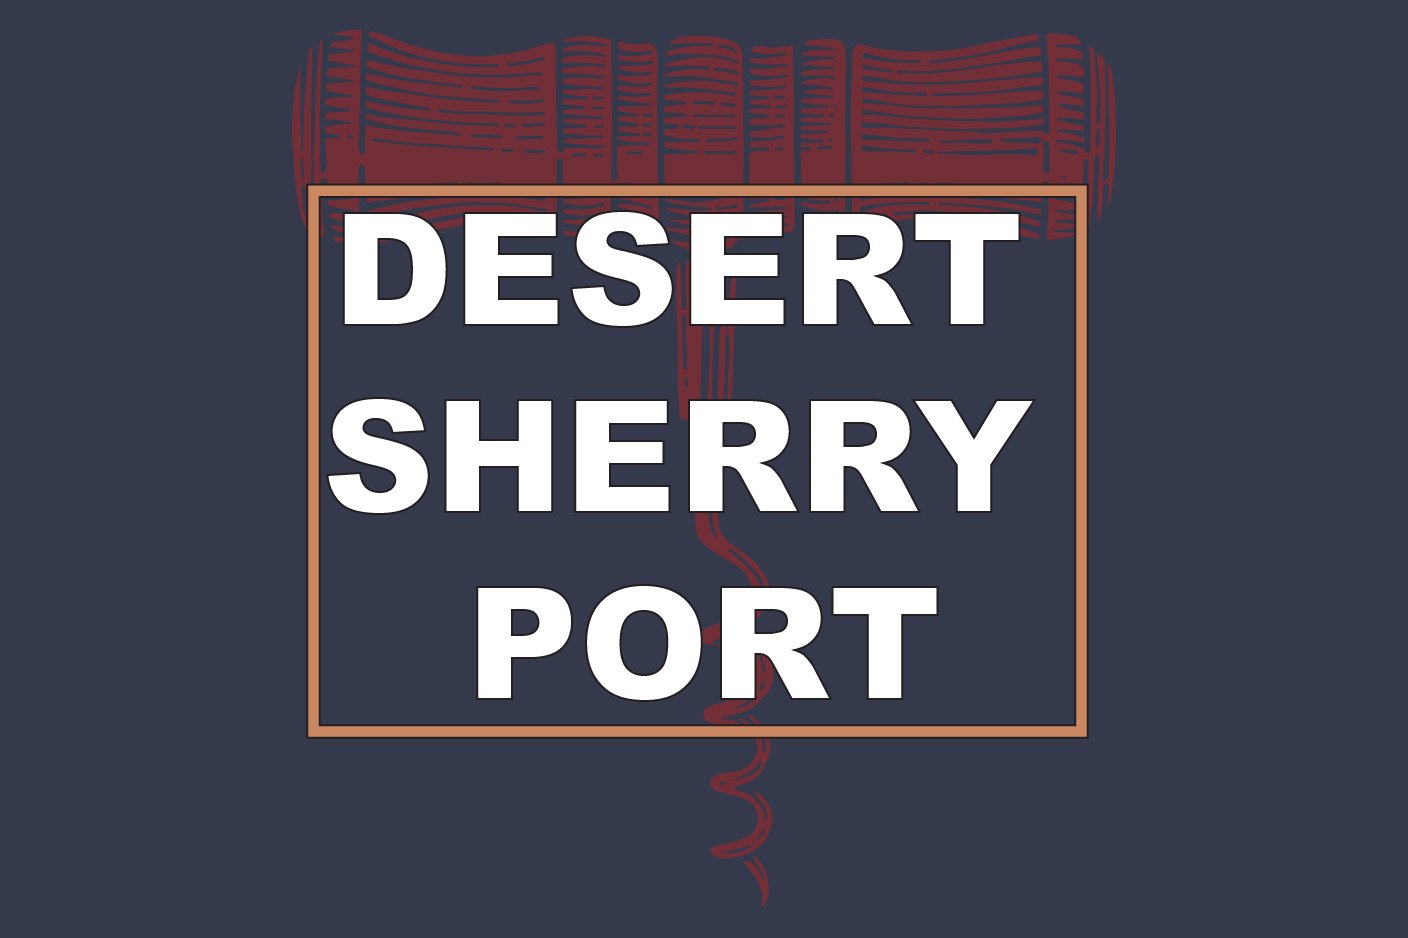 Dessert, Sherry & Port